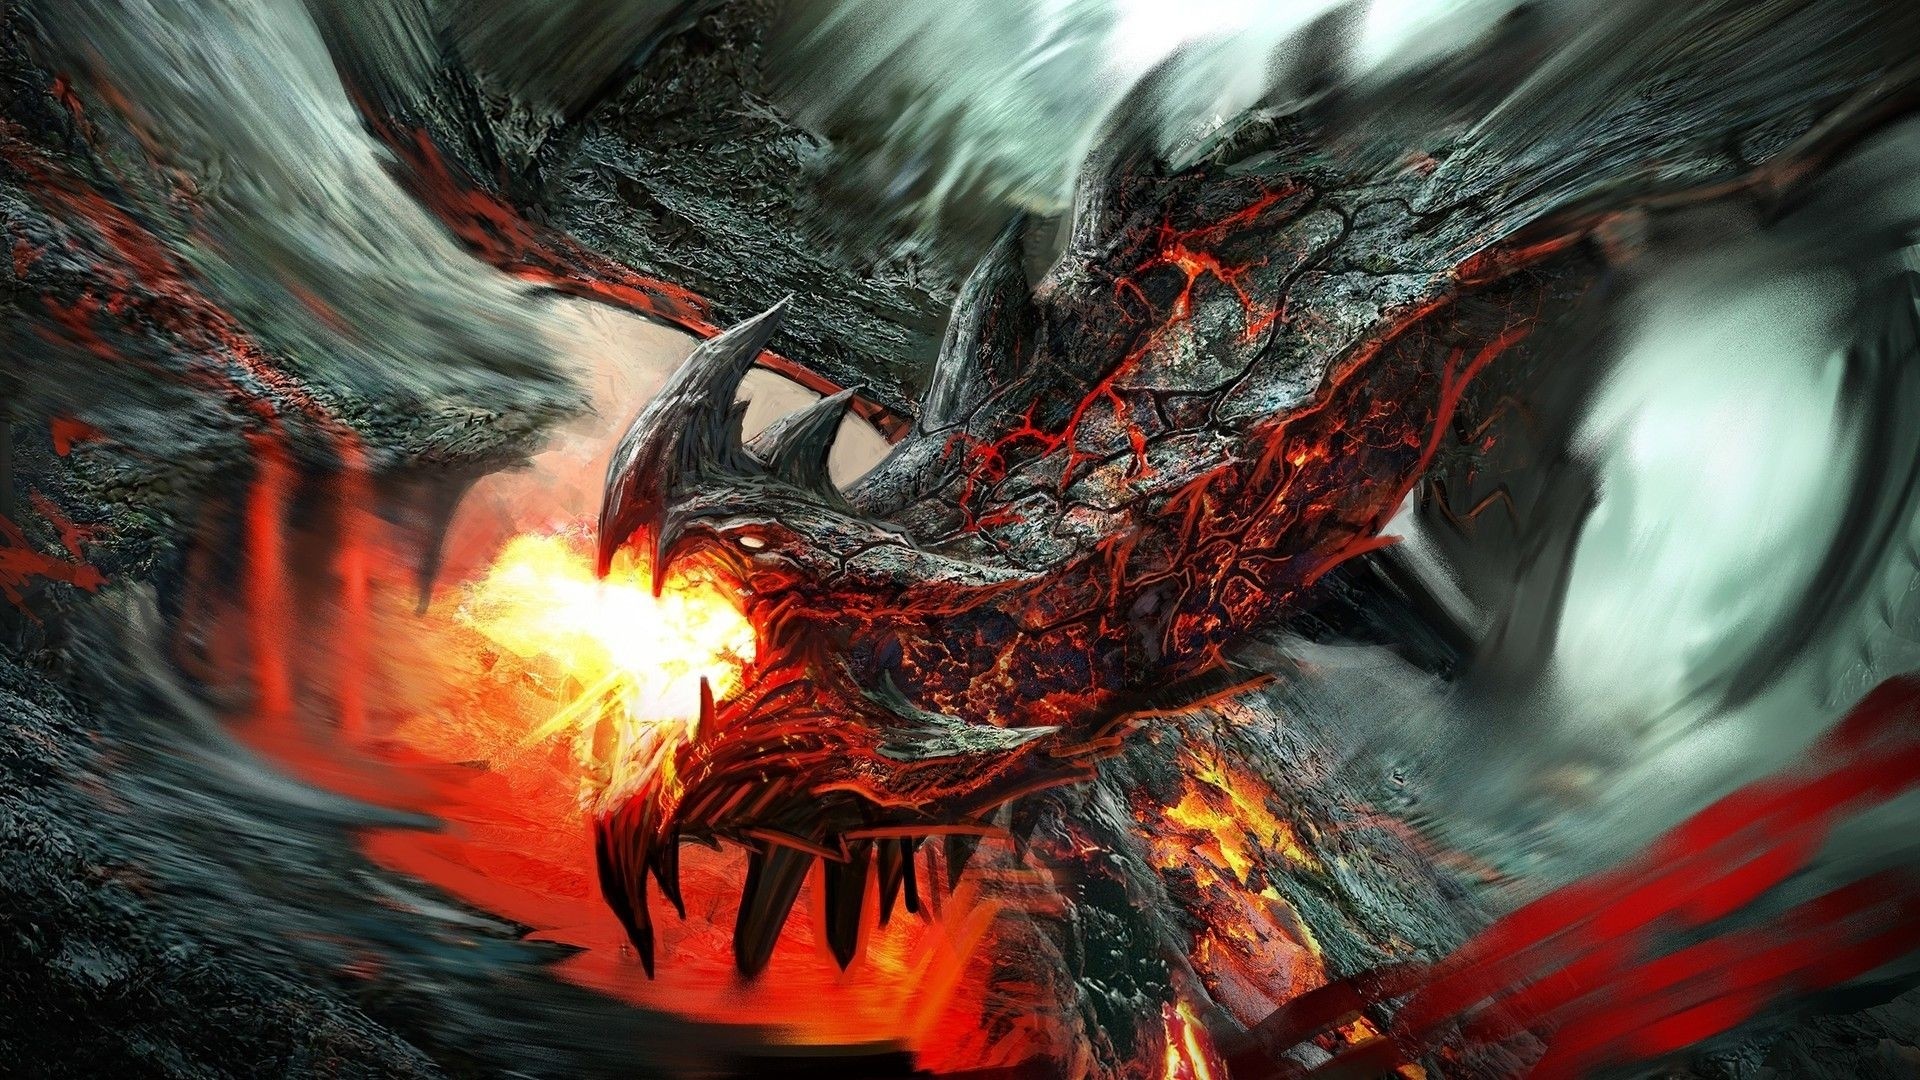 1920x1080 Title : fire-breathing-lava-dragon-fantasy-hd-wallpaper-1920Ã1080-2073.  Dimension : 1920 x 1080. File Type : JPG/JPEG